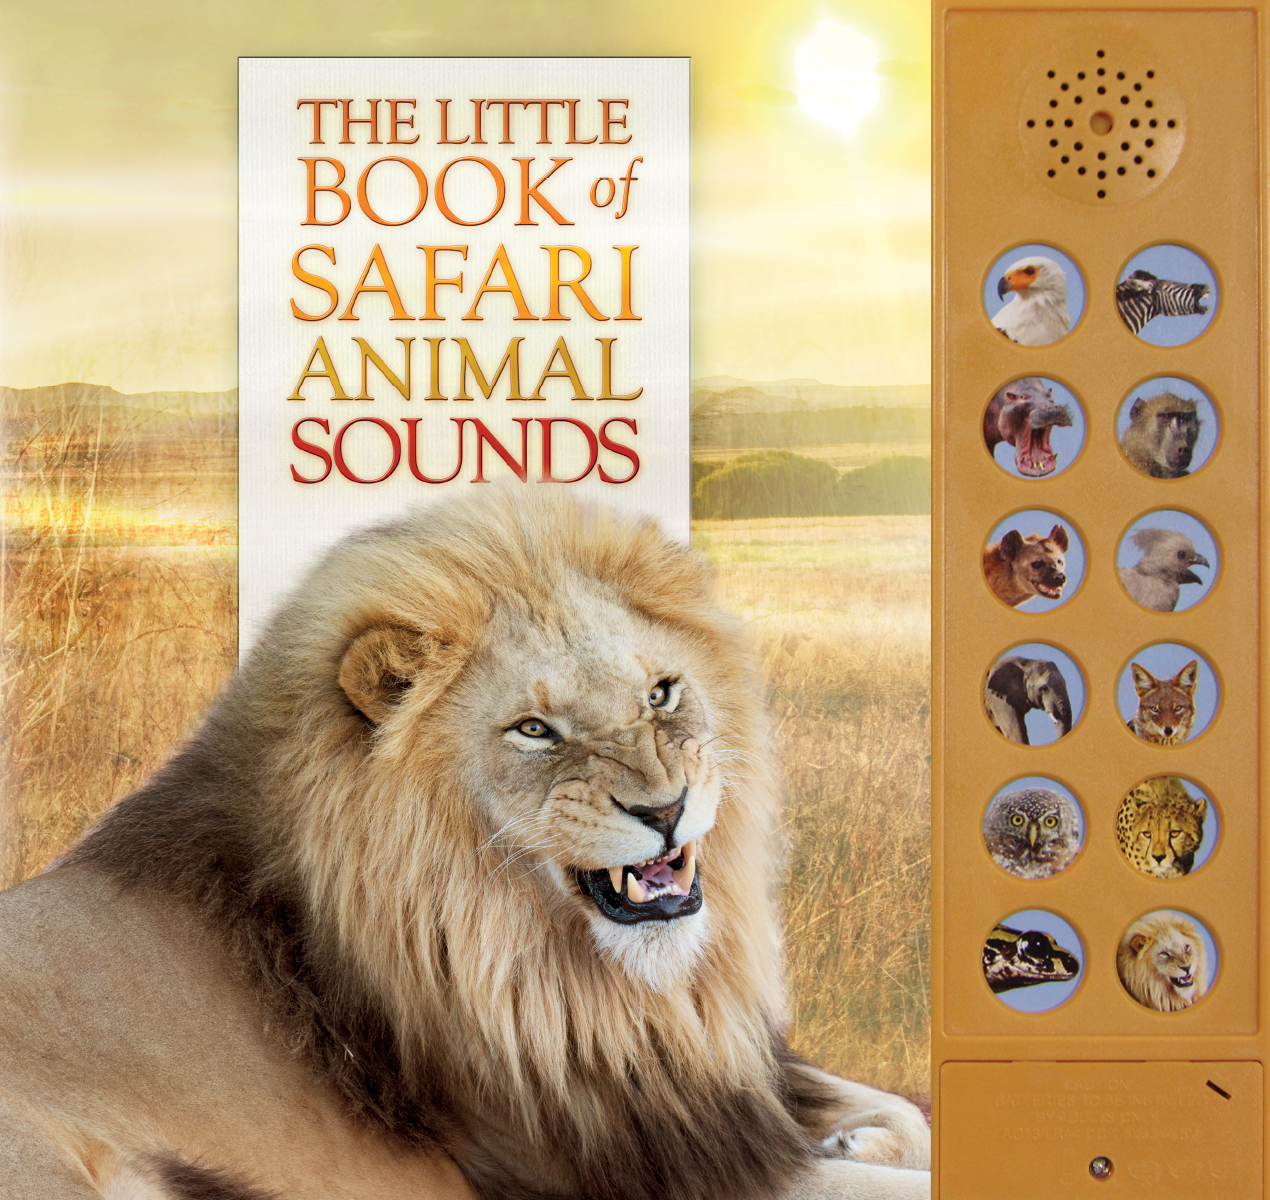 Little Book of Safari Animal Sounds, The